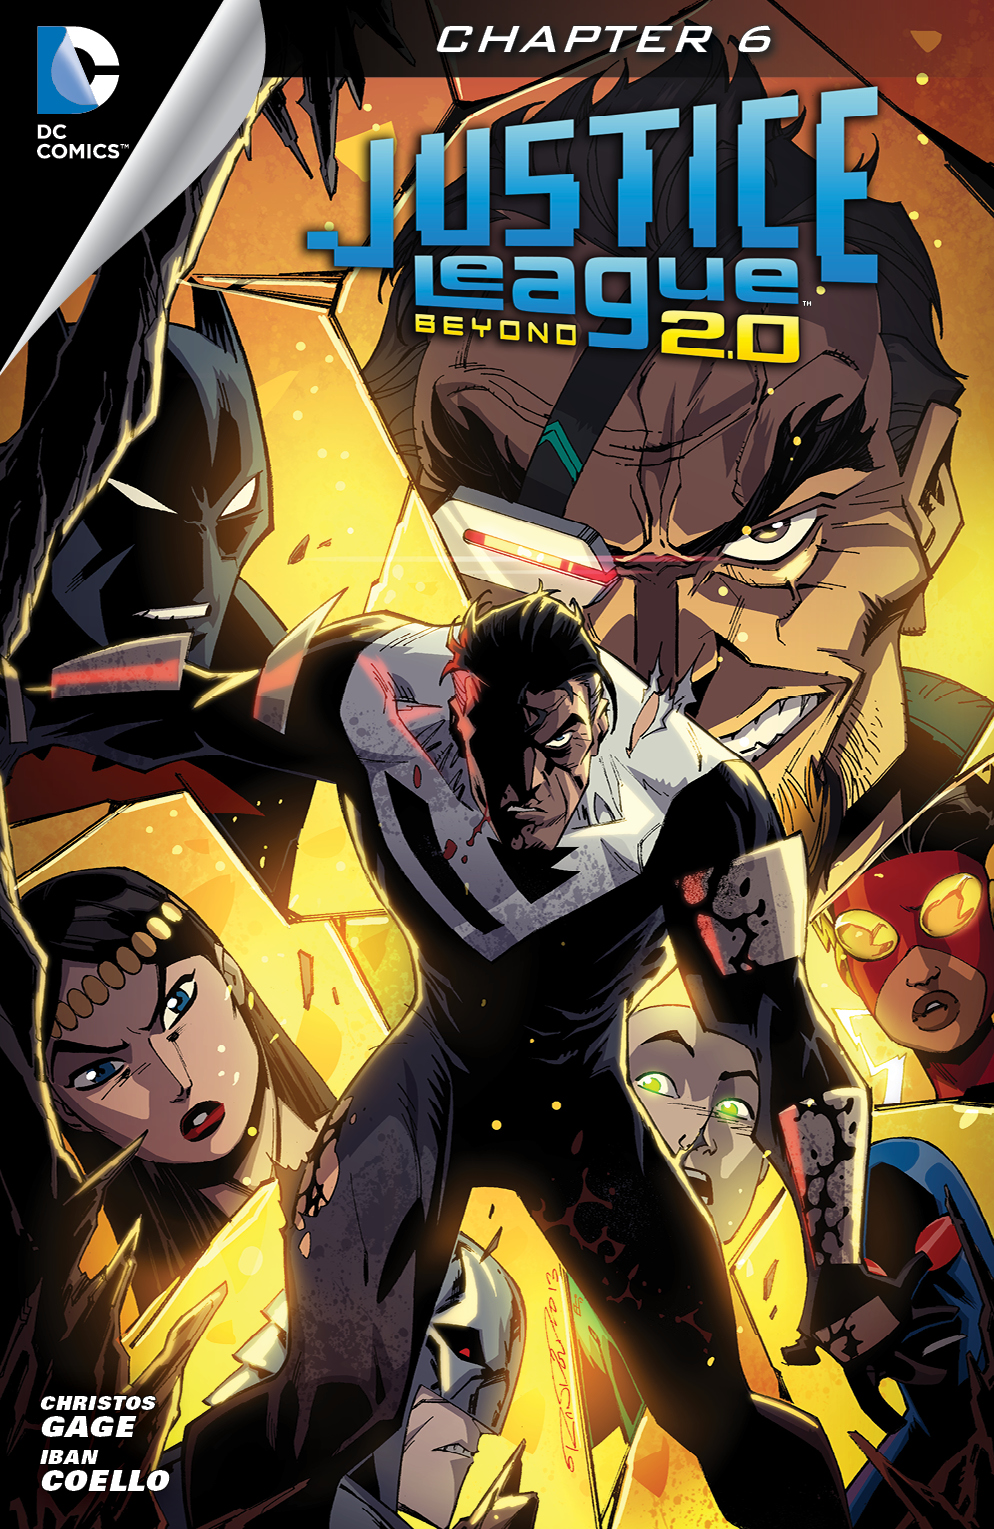 Justice League Beyond 2.0 #6 preview images